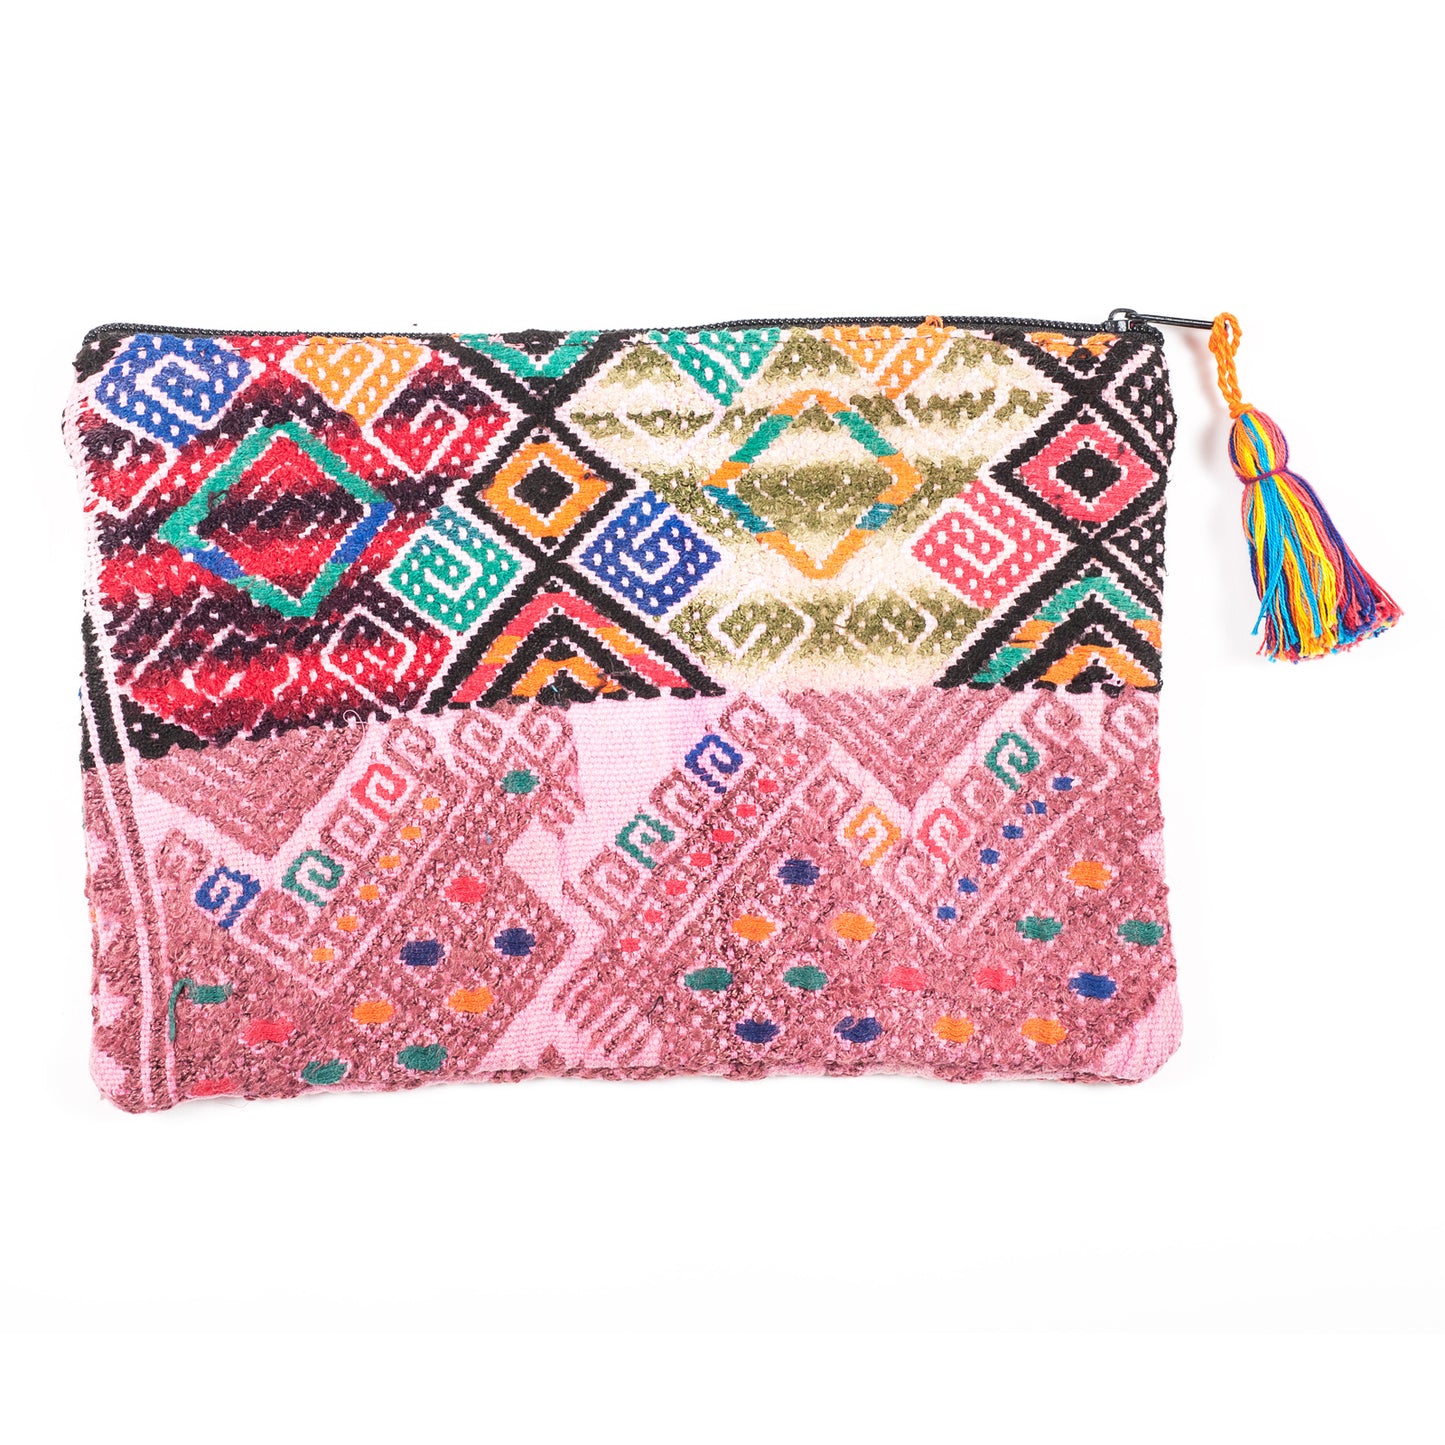 Upcycled Huipil Cosmetic Bag (Guatemala) - Style 4